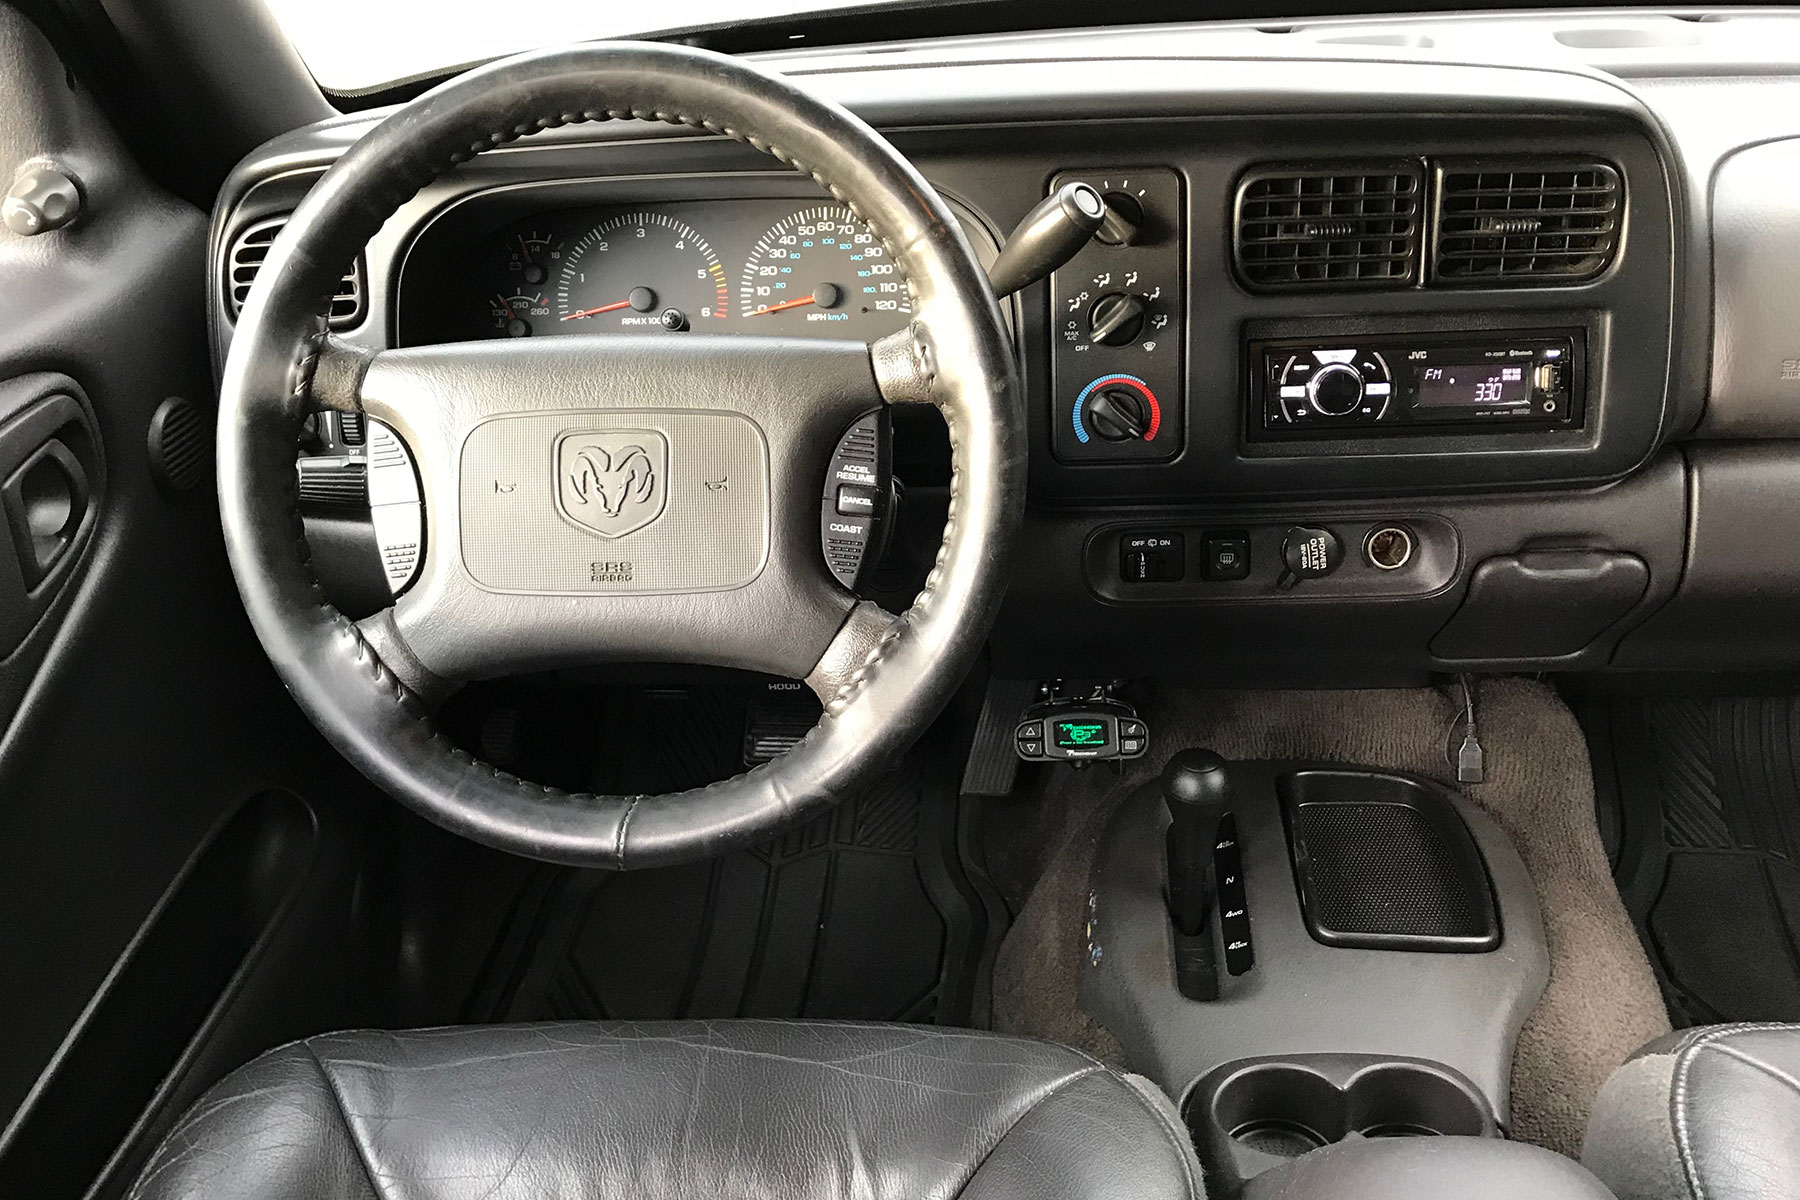 2000 Dodge Durango Rt For Sale Interior Moonsash